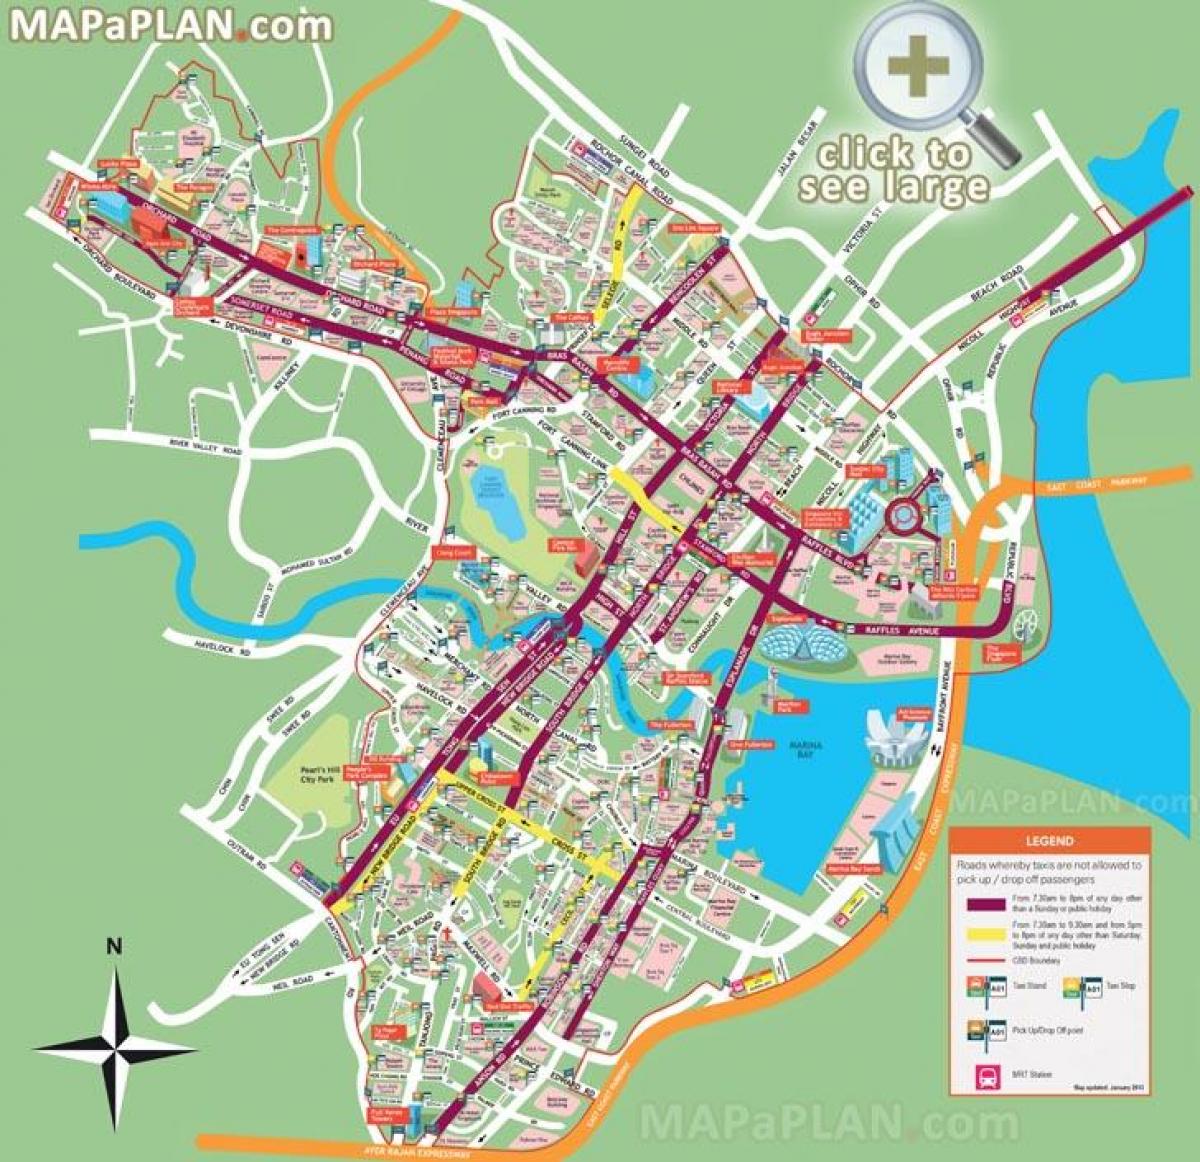 Singapura tempat wisata peta